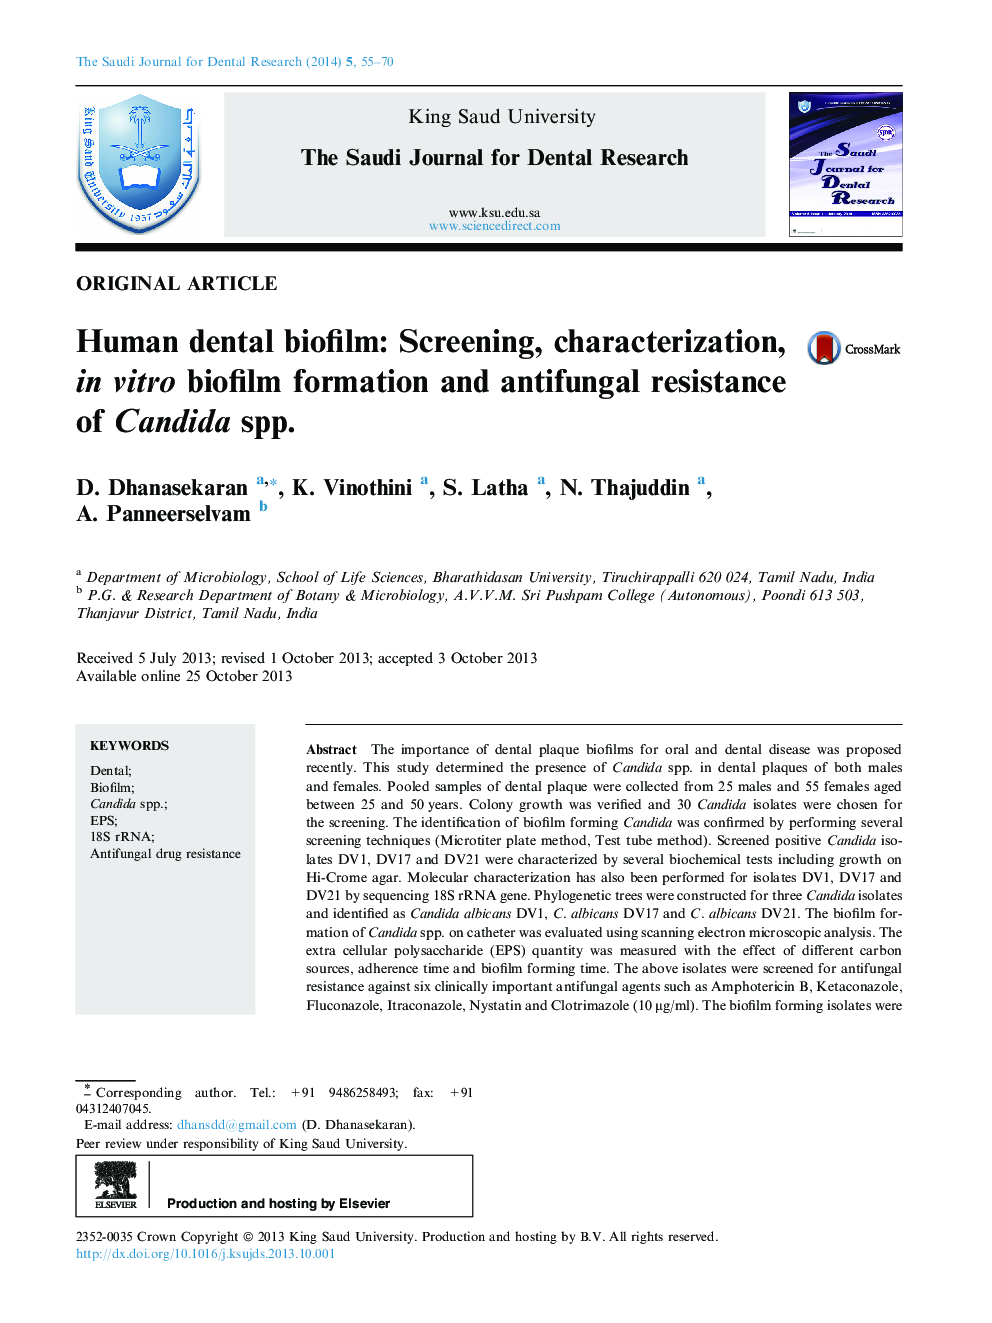 Human dental biofilm: Screening, characterization, in vitro biofilm formation and antifungal resistance of Candida spp. 